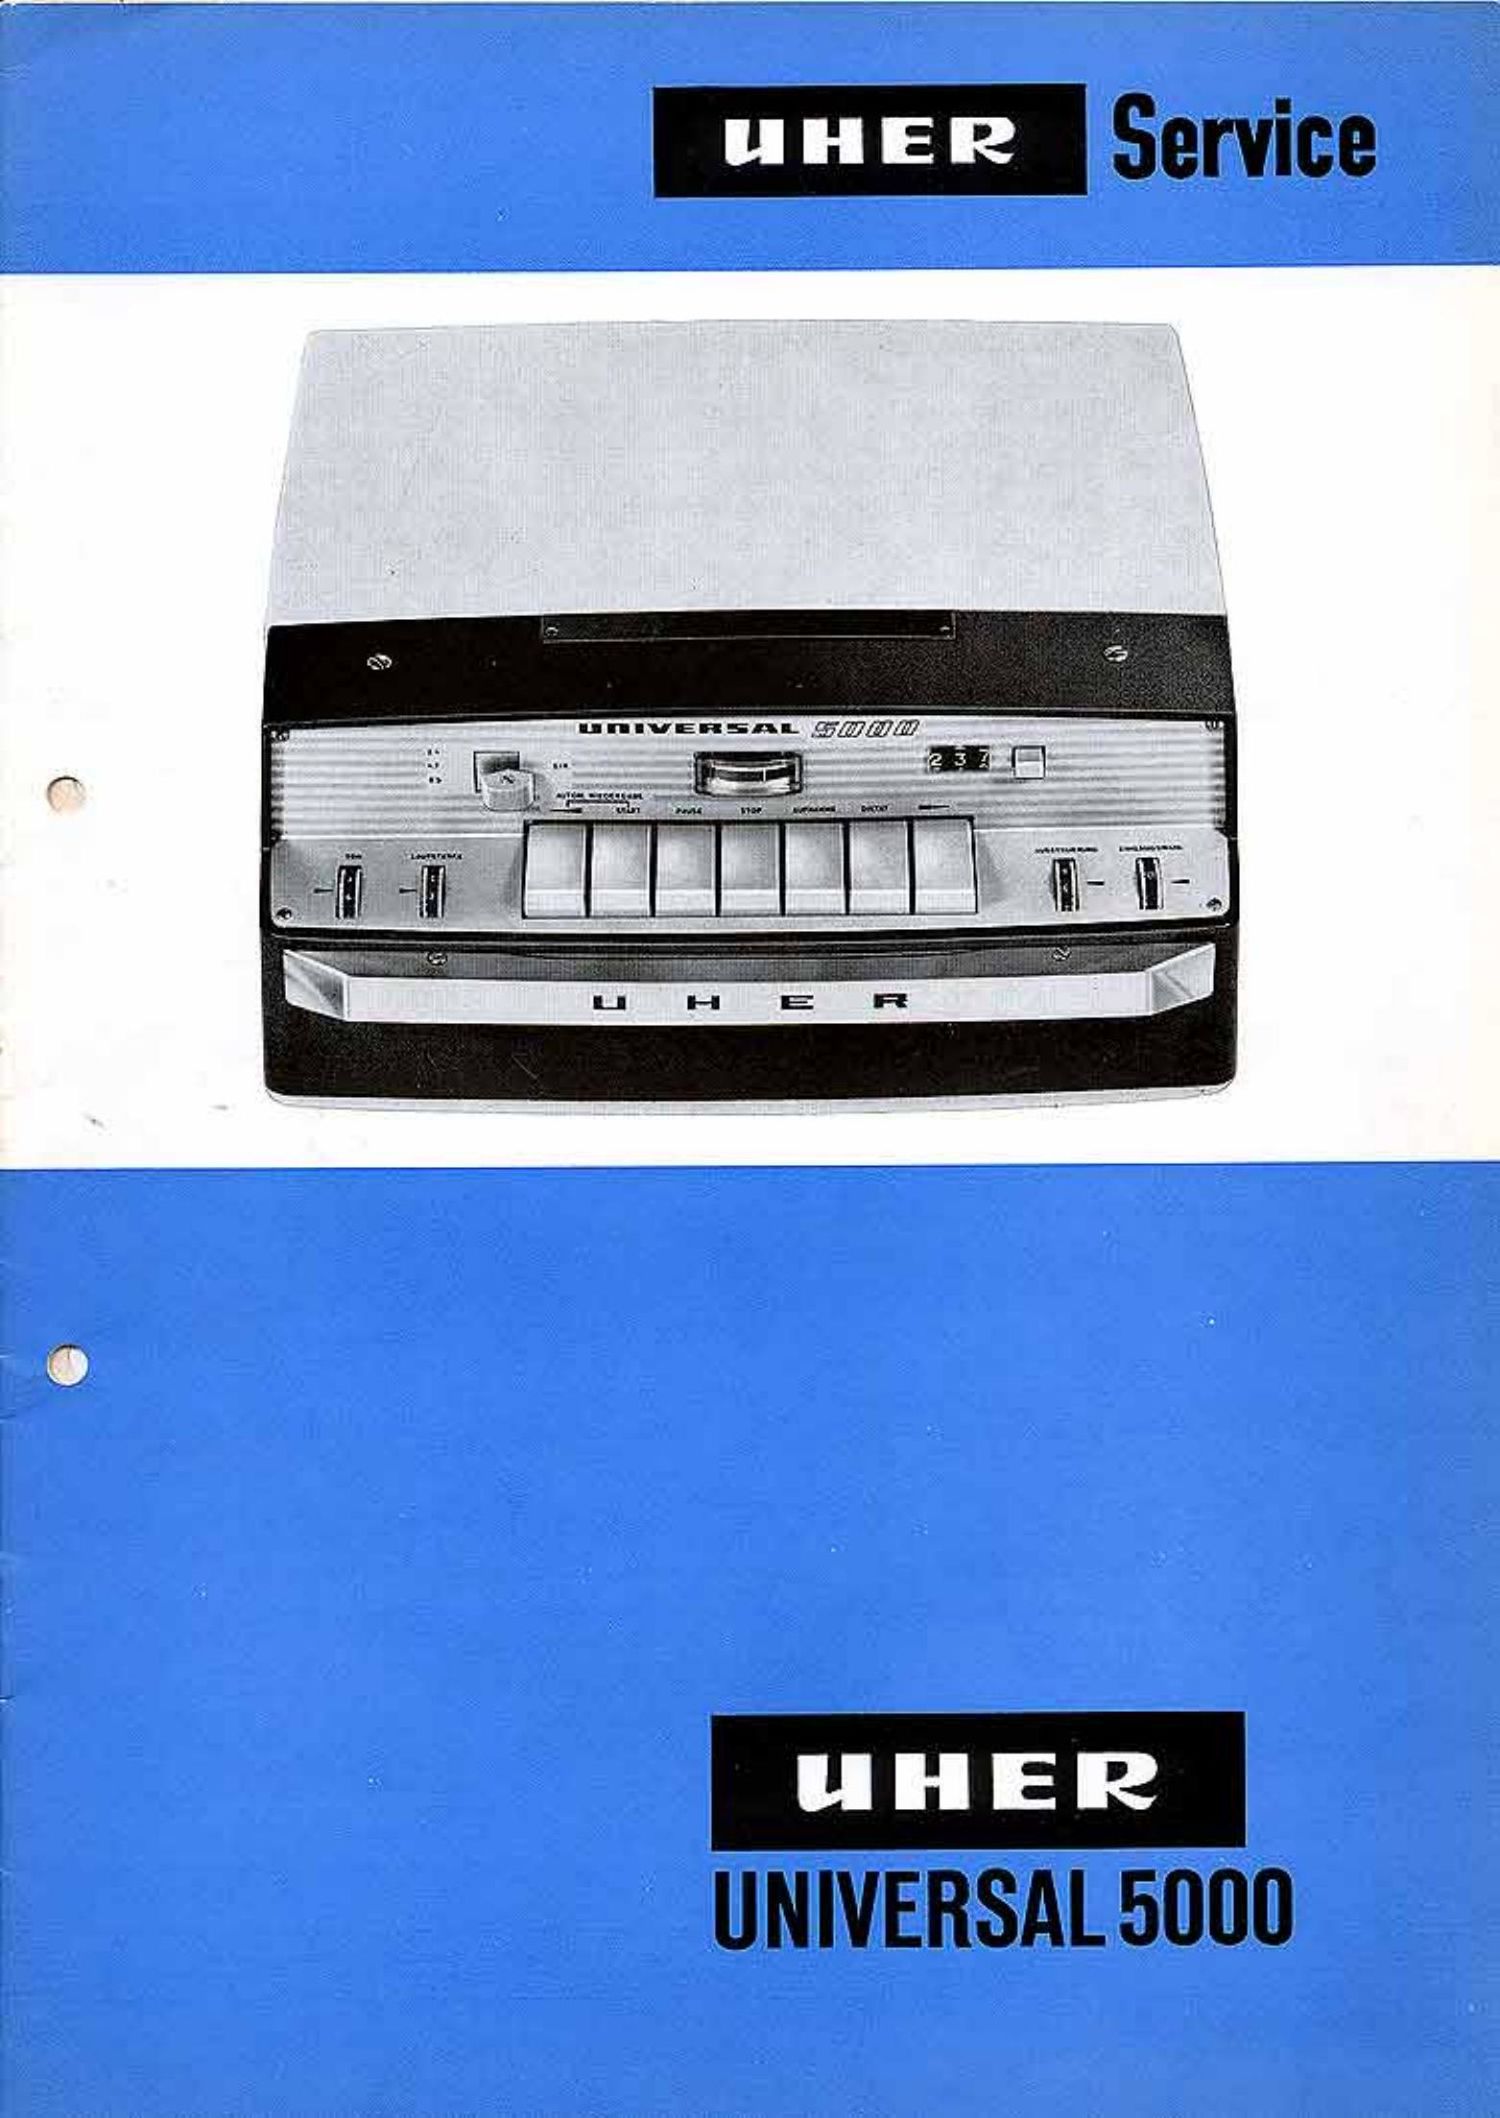 Uher Universal 5000 Service Manual